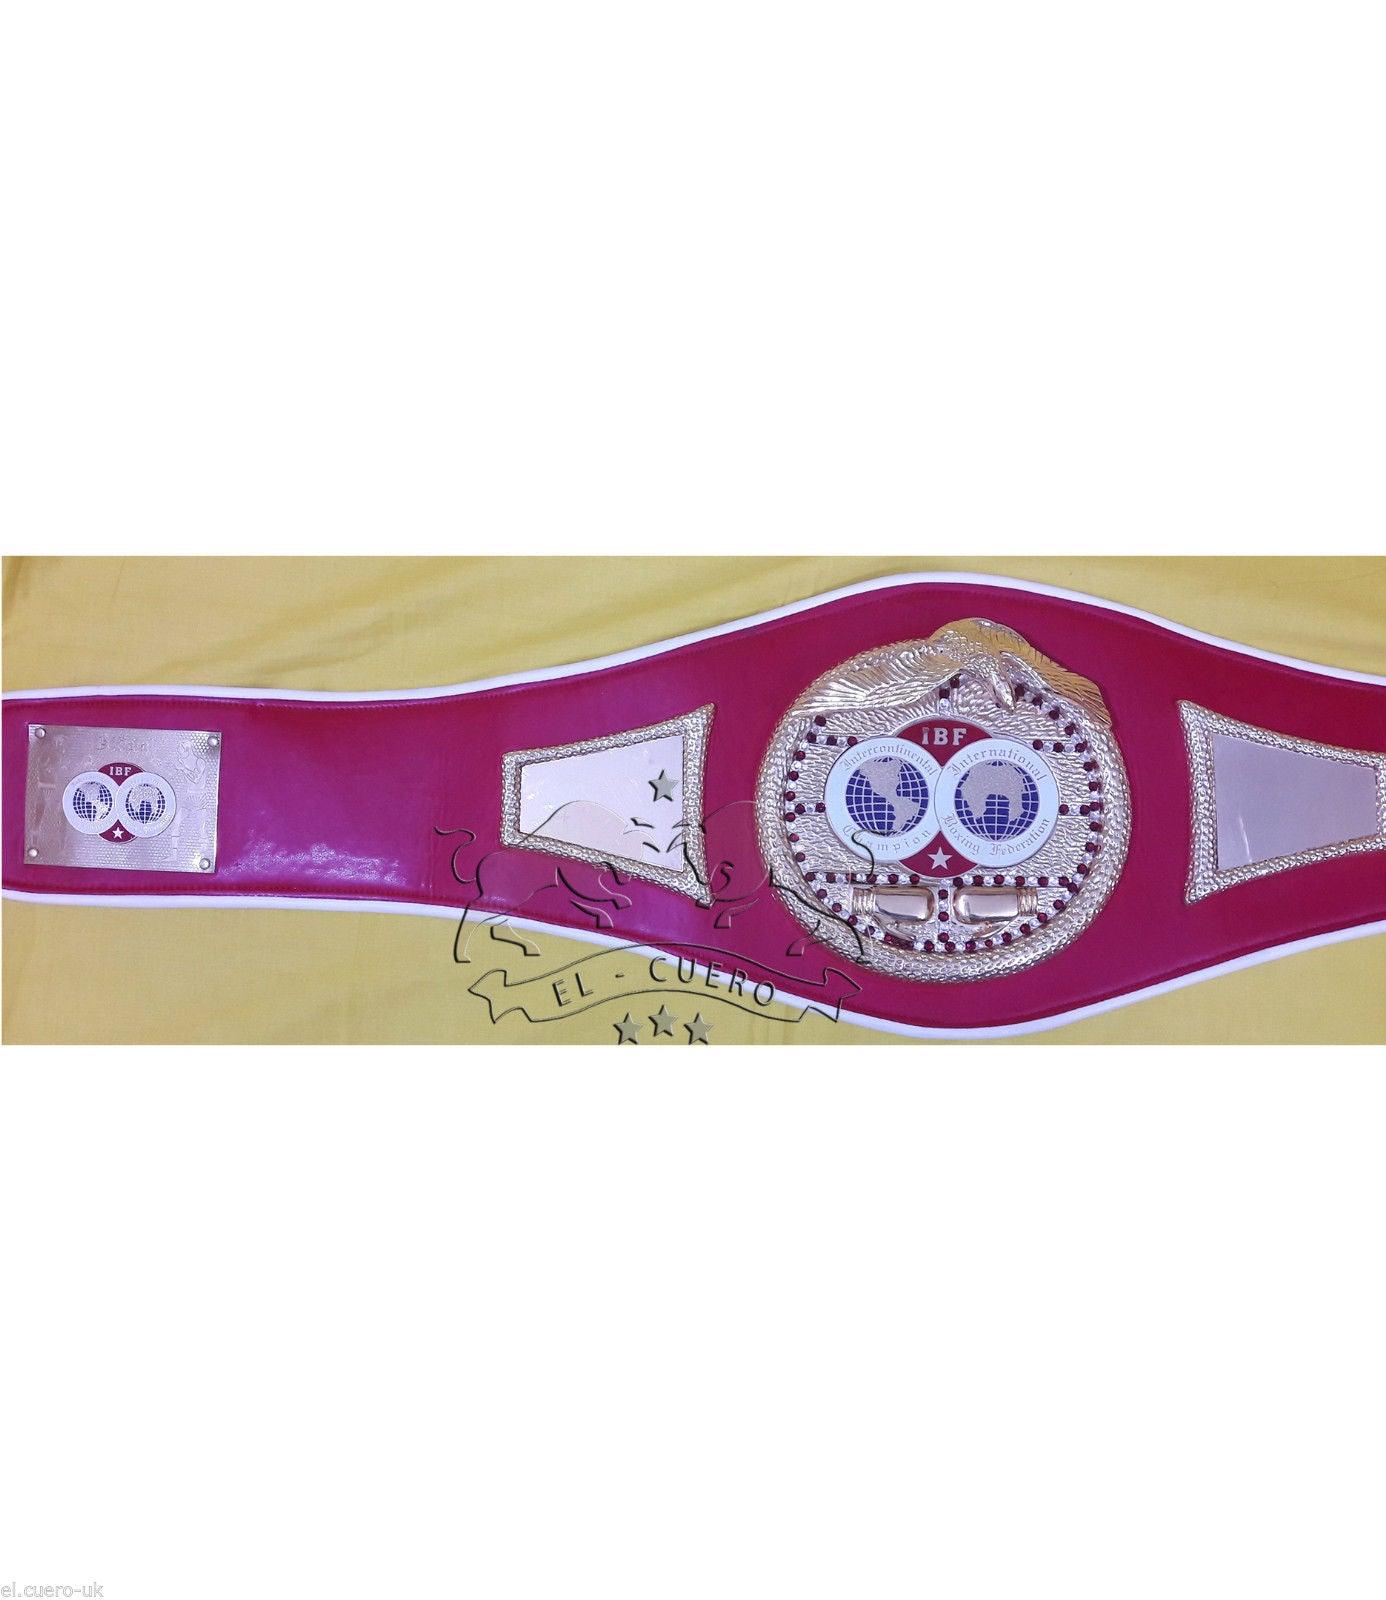 IBF INTERNATIONAL BOXING FEDERATION Championship Belt - Zees Belts